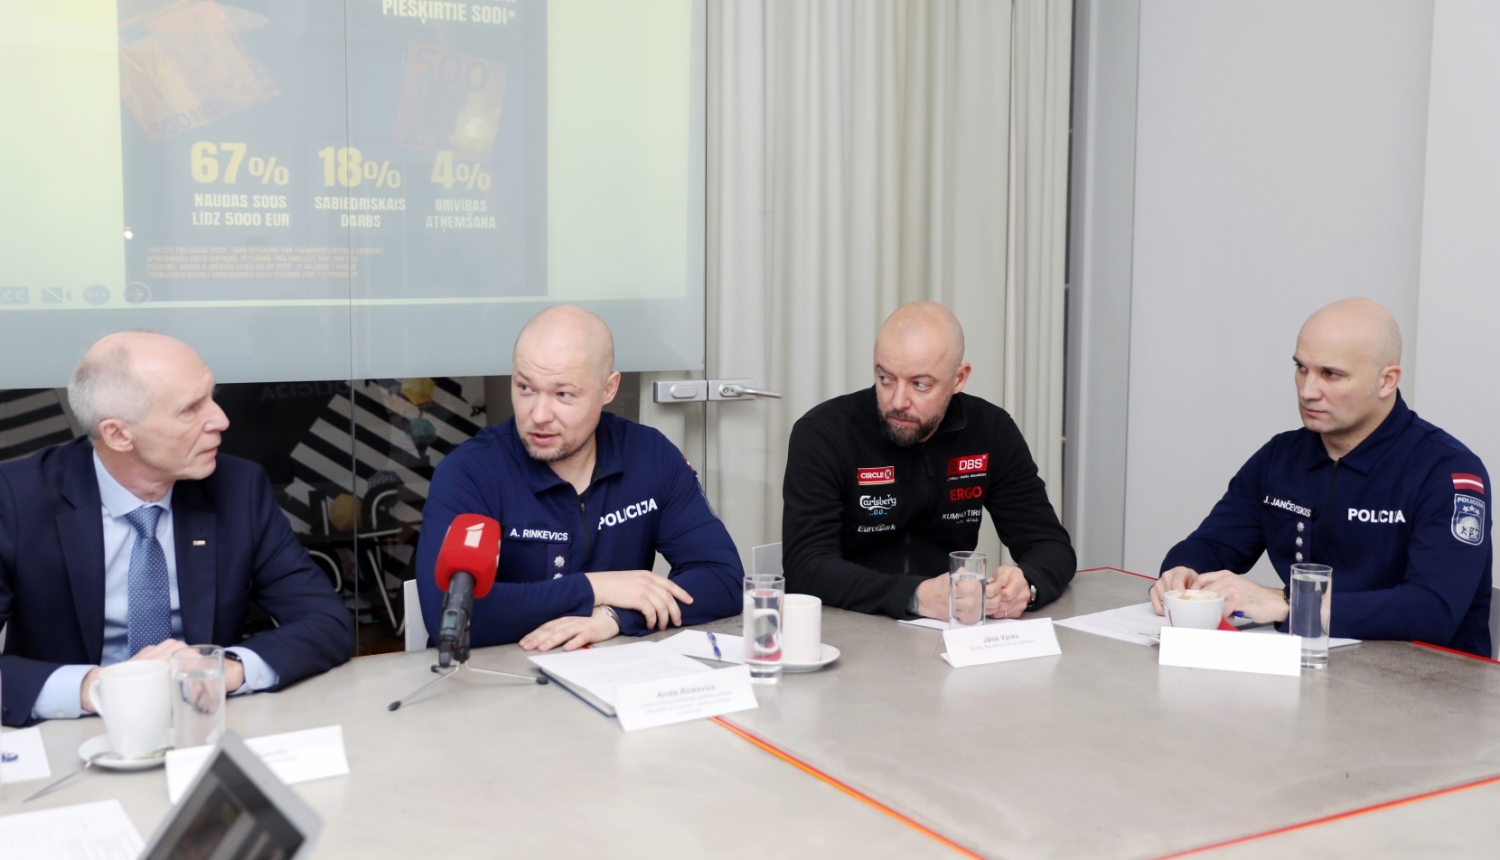 No kreisās puses: Aivars Aksenoks, Andis Rinkevis, Jānis Vanks, Juris Jančevskis.